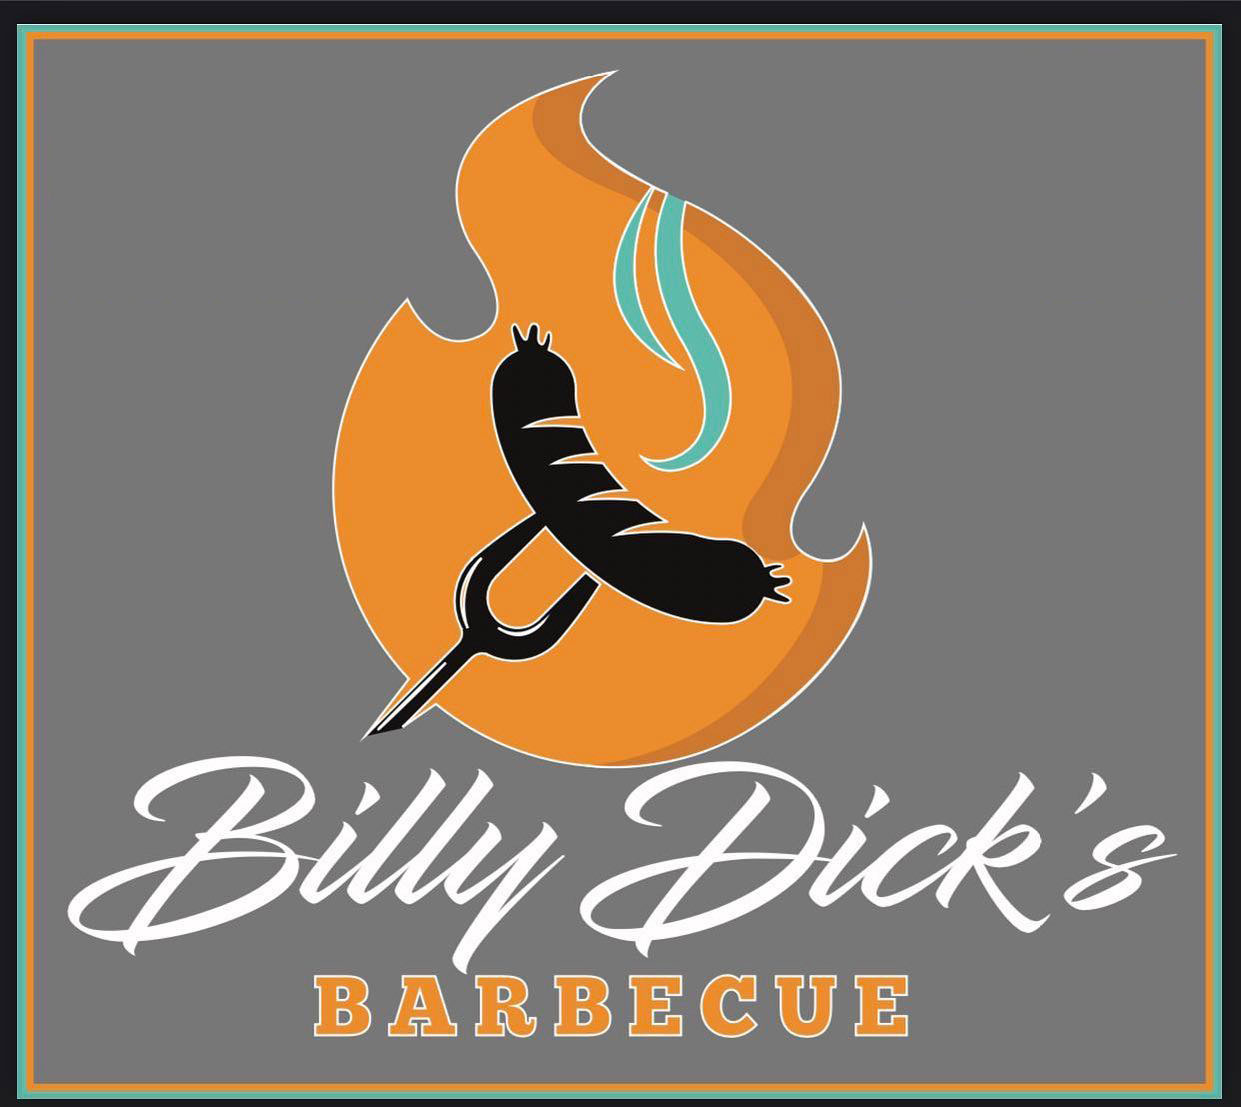 Billy Dick's BBQ